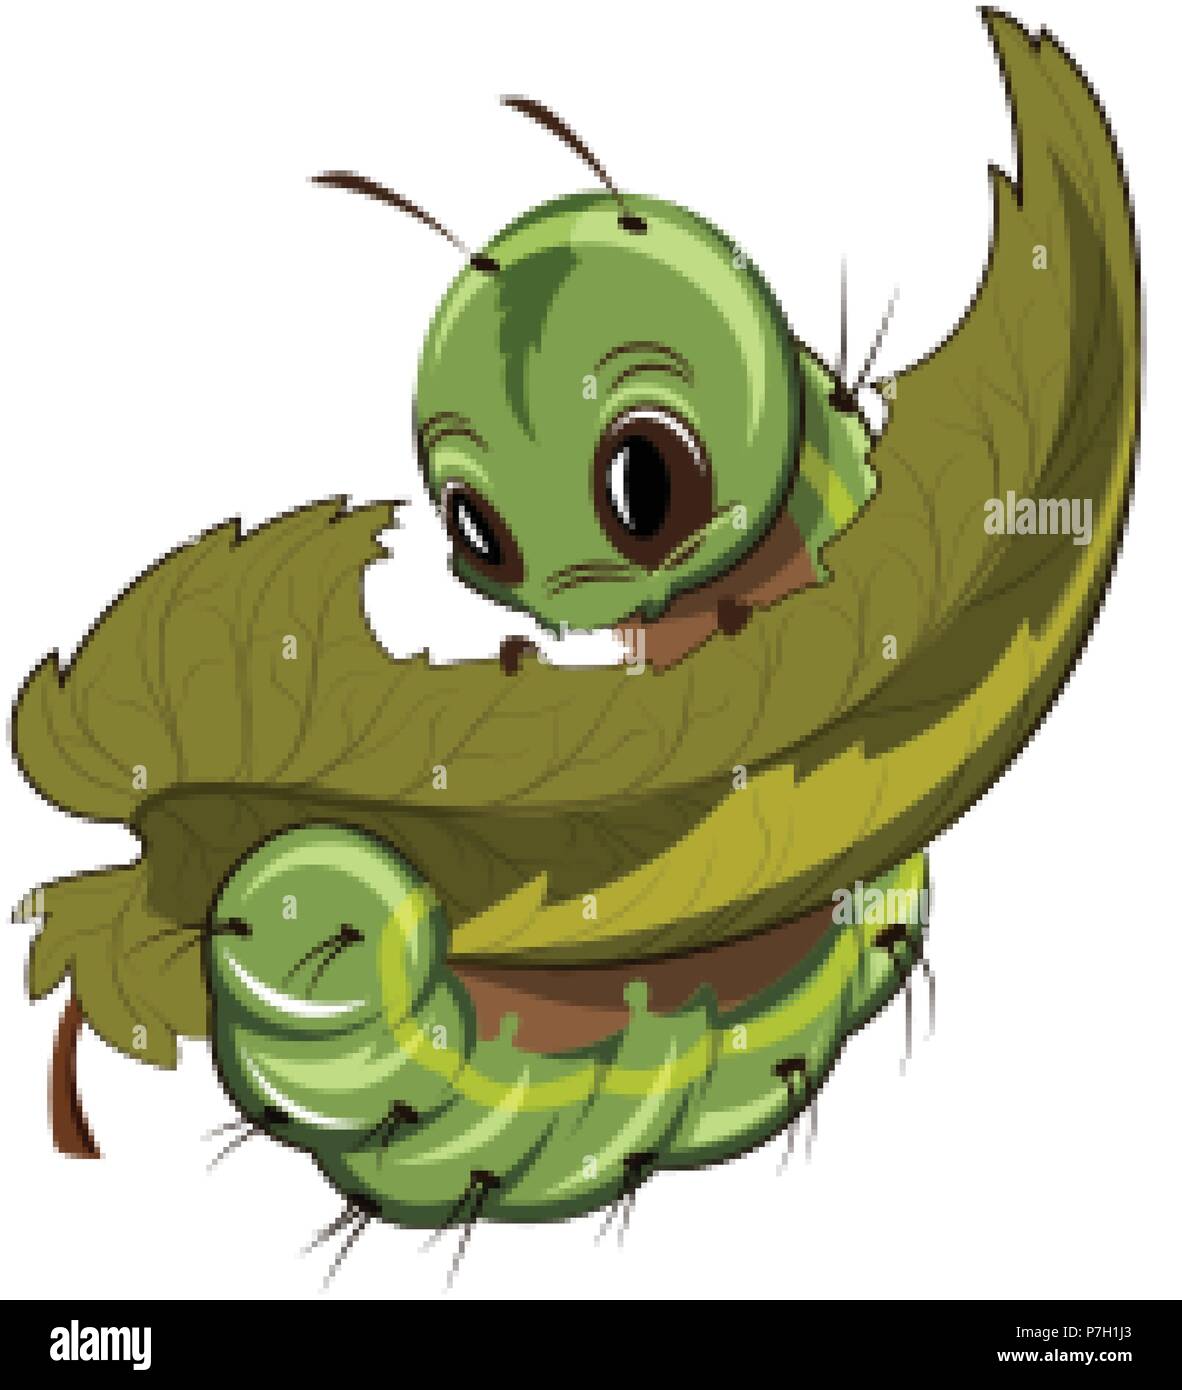 cartoon caterpillar munching leaf Stock Vector Image & Art - Alamy